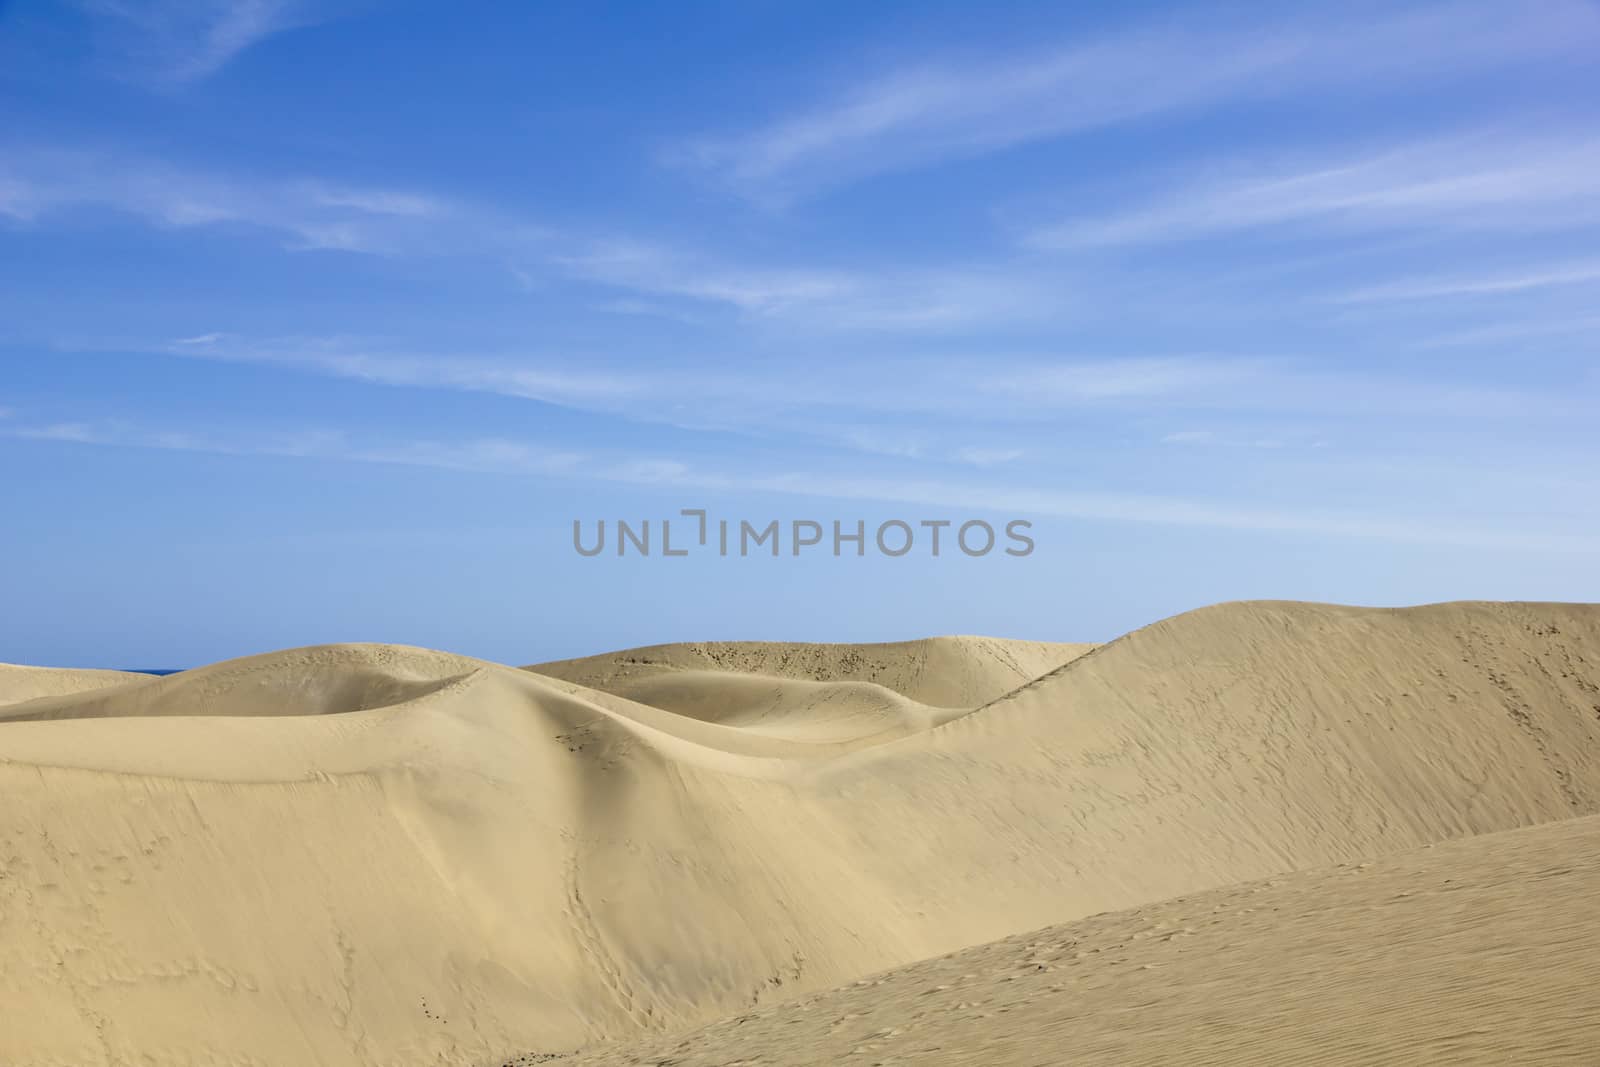 Spain. Gran Canaria island. Dunes of Maspalomas by oxanatravel